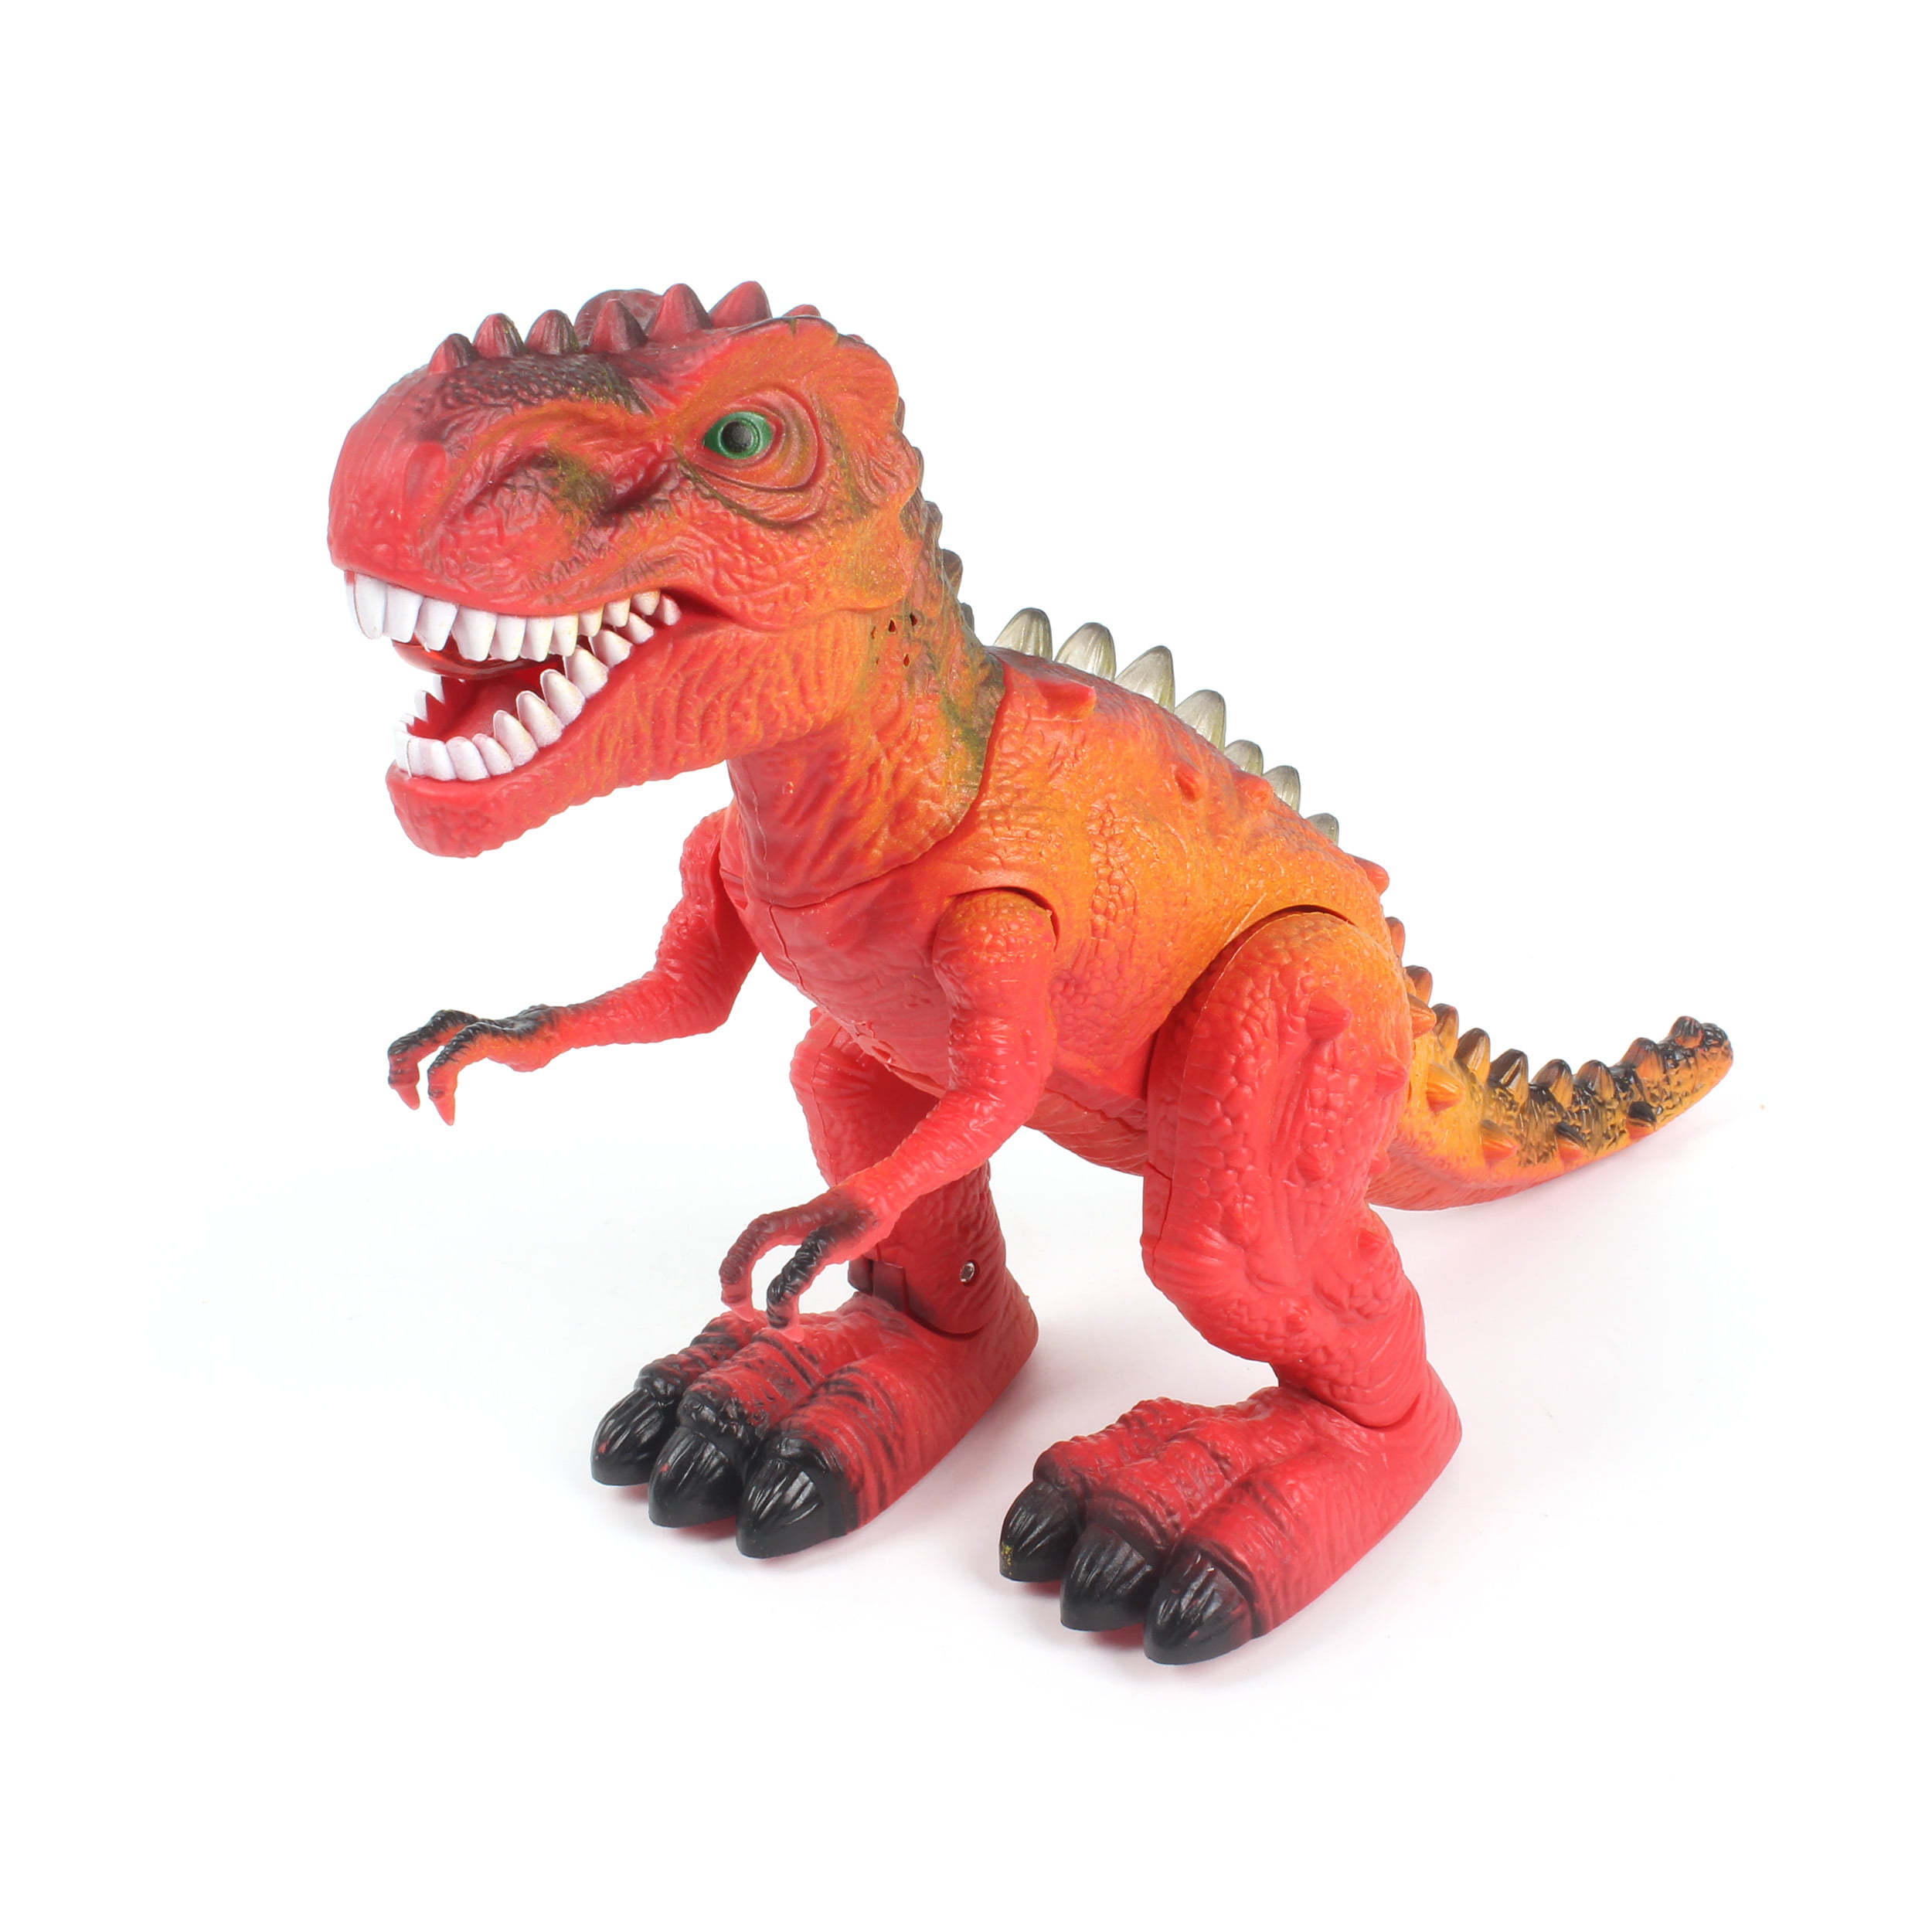 LEGO Jurassic World Dino Combo Pack (66774) 6 Mini figures 3 Dinos